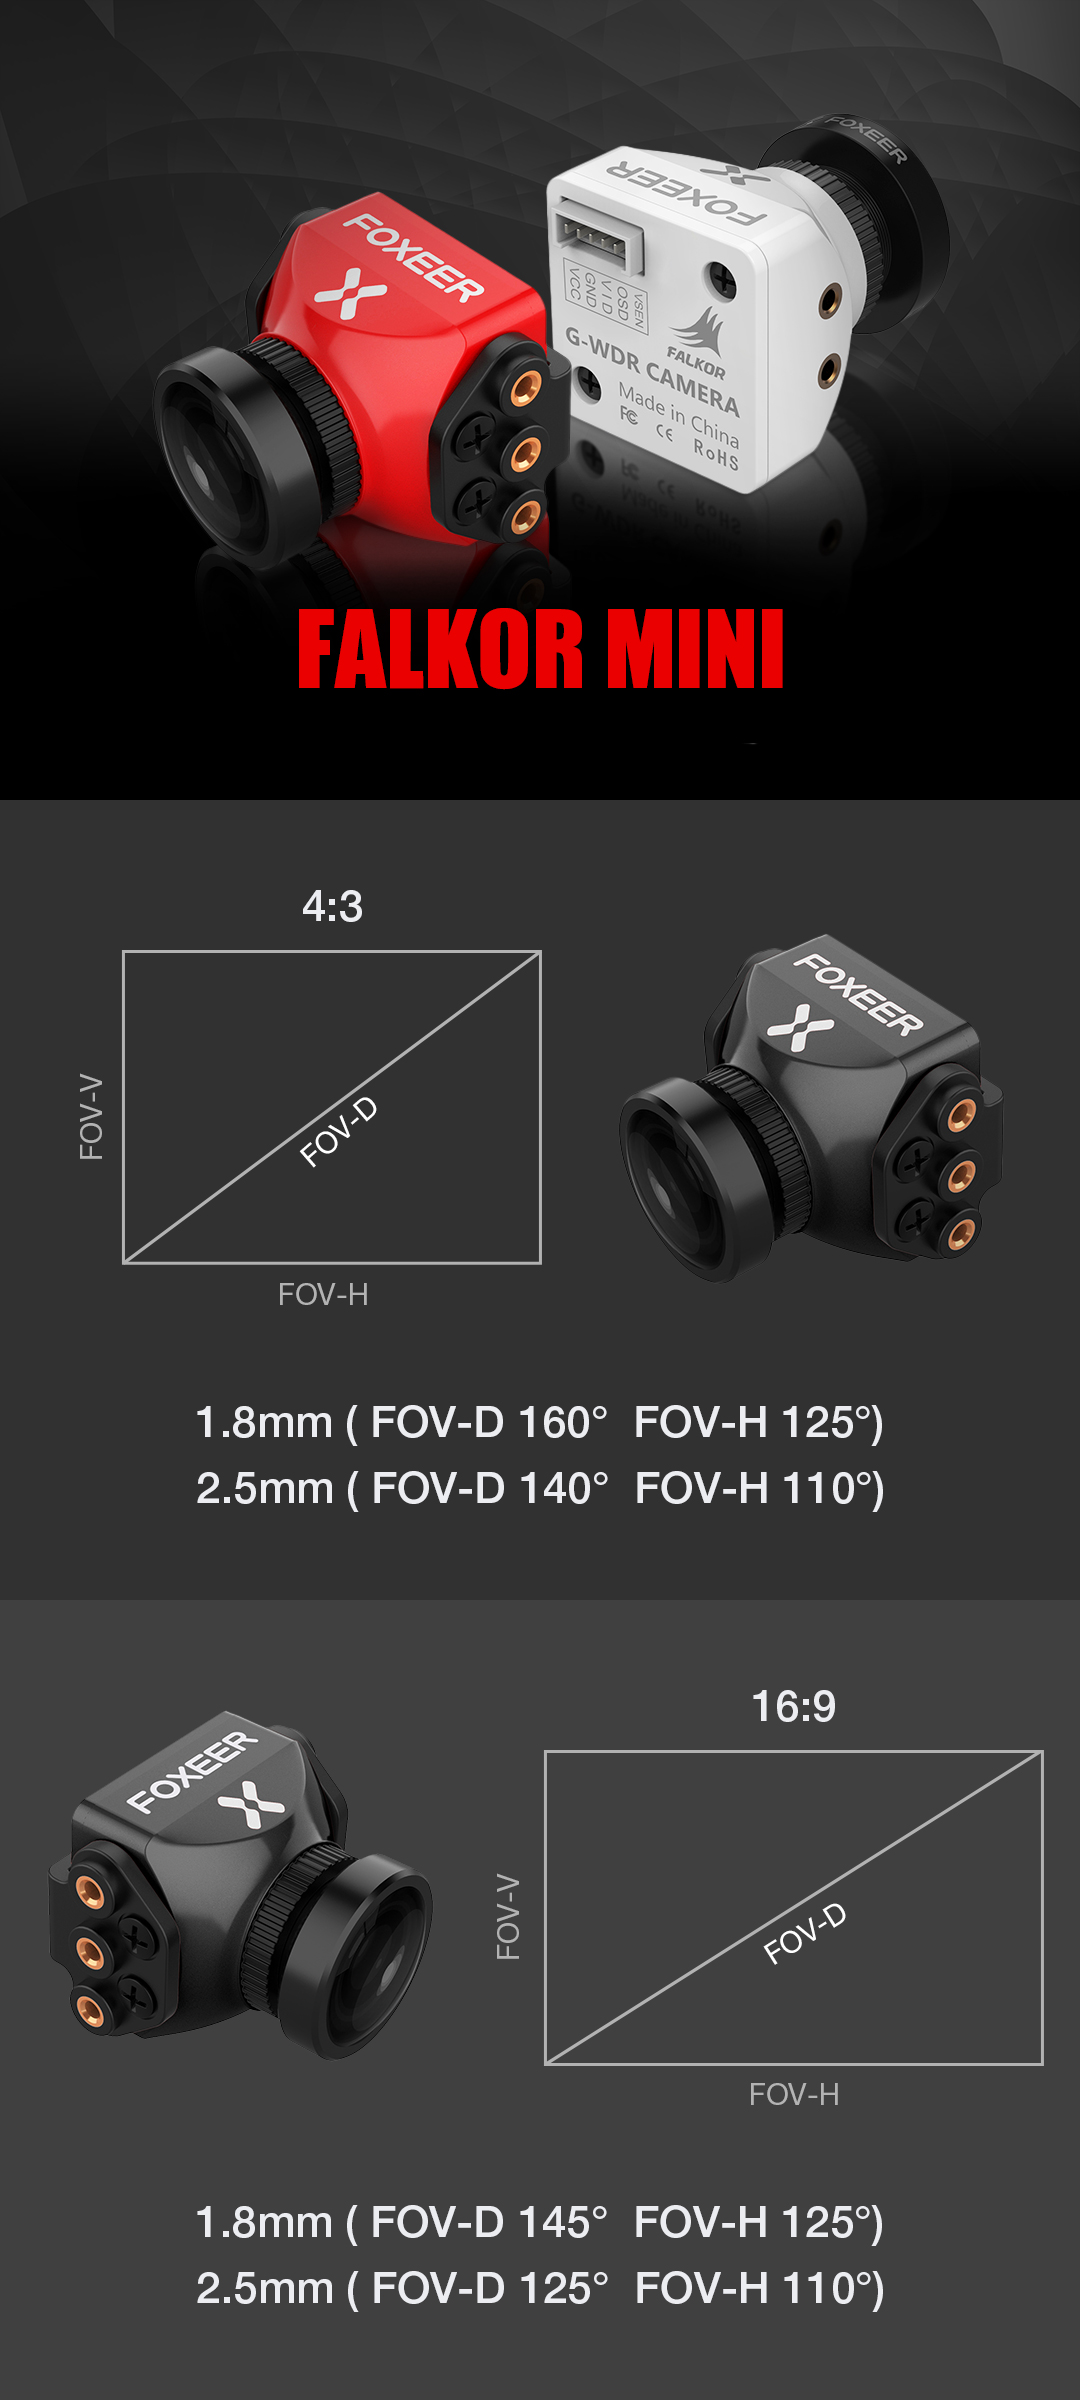 Upgraded-Foxeer-Falkor-1200TVL-13-CMOS-MiniFull-Size-FPV-Camera-16943-PALNTSC-Switchable-GWDR-1360783